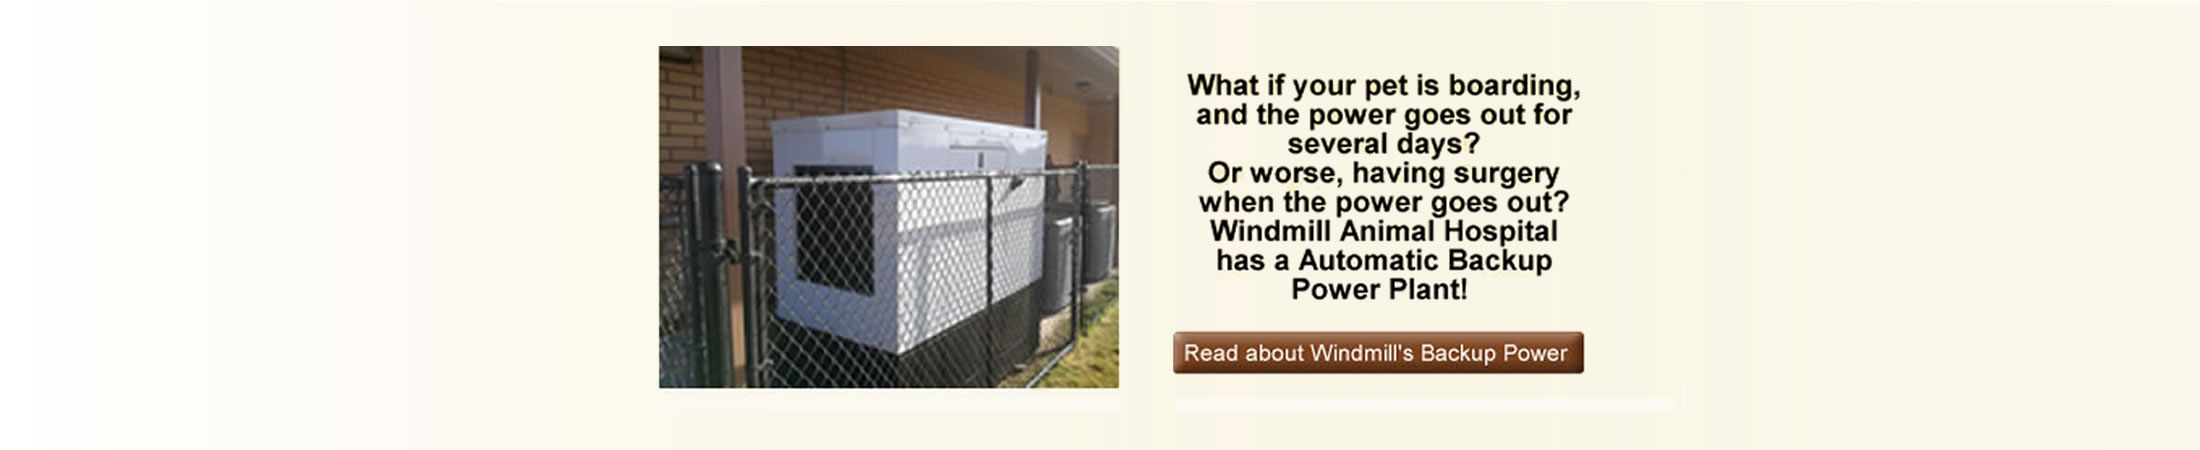 Windmill Animal Hospital Power Backup